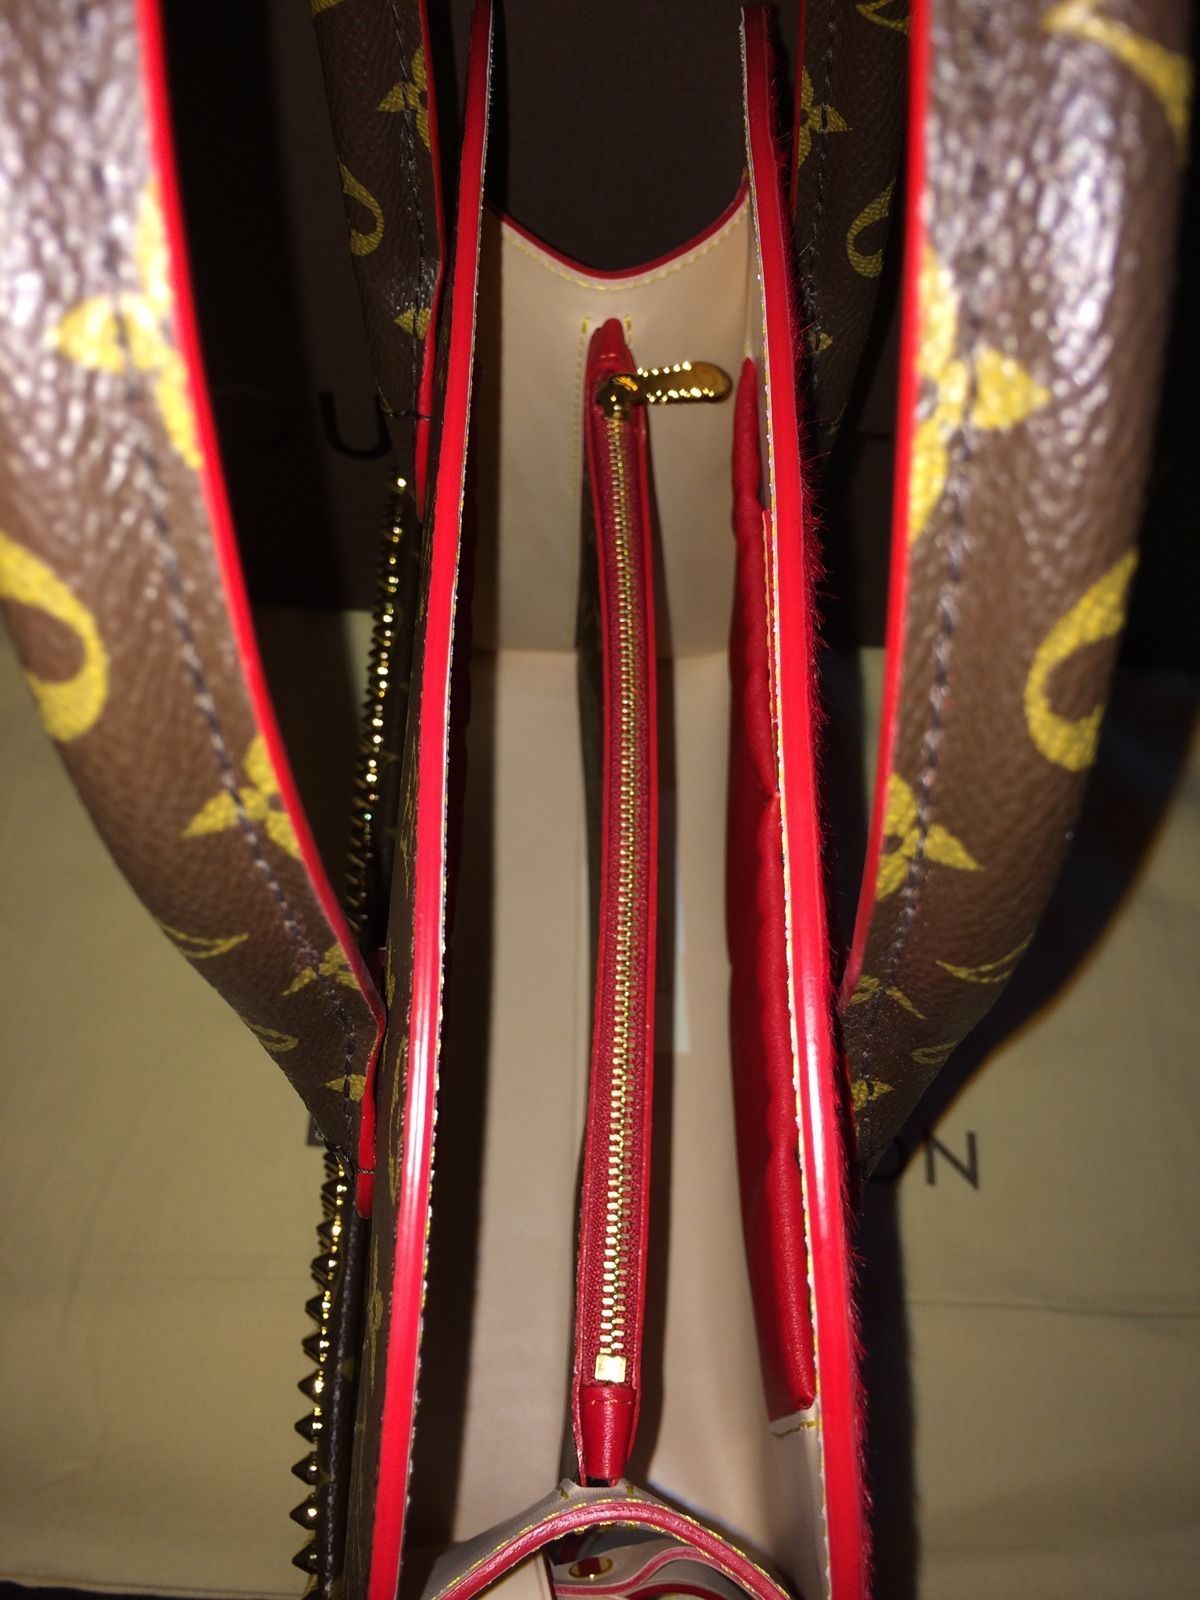 1.3 Louis Vuitton Christian Louboutin Iconoclast Handbag